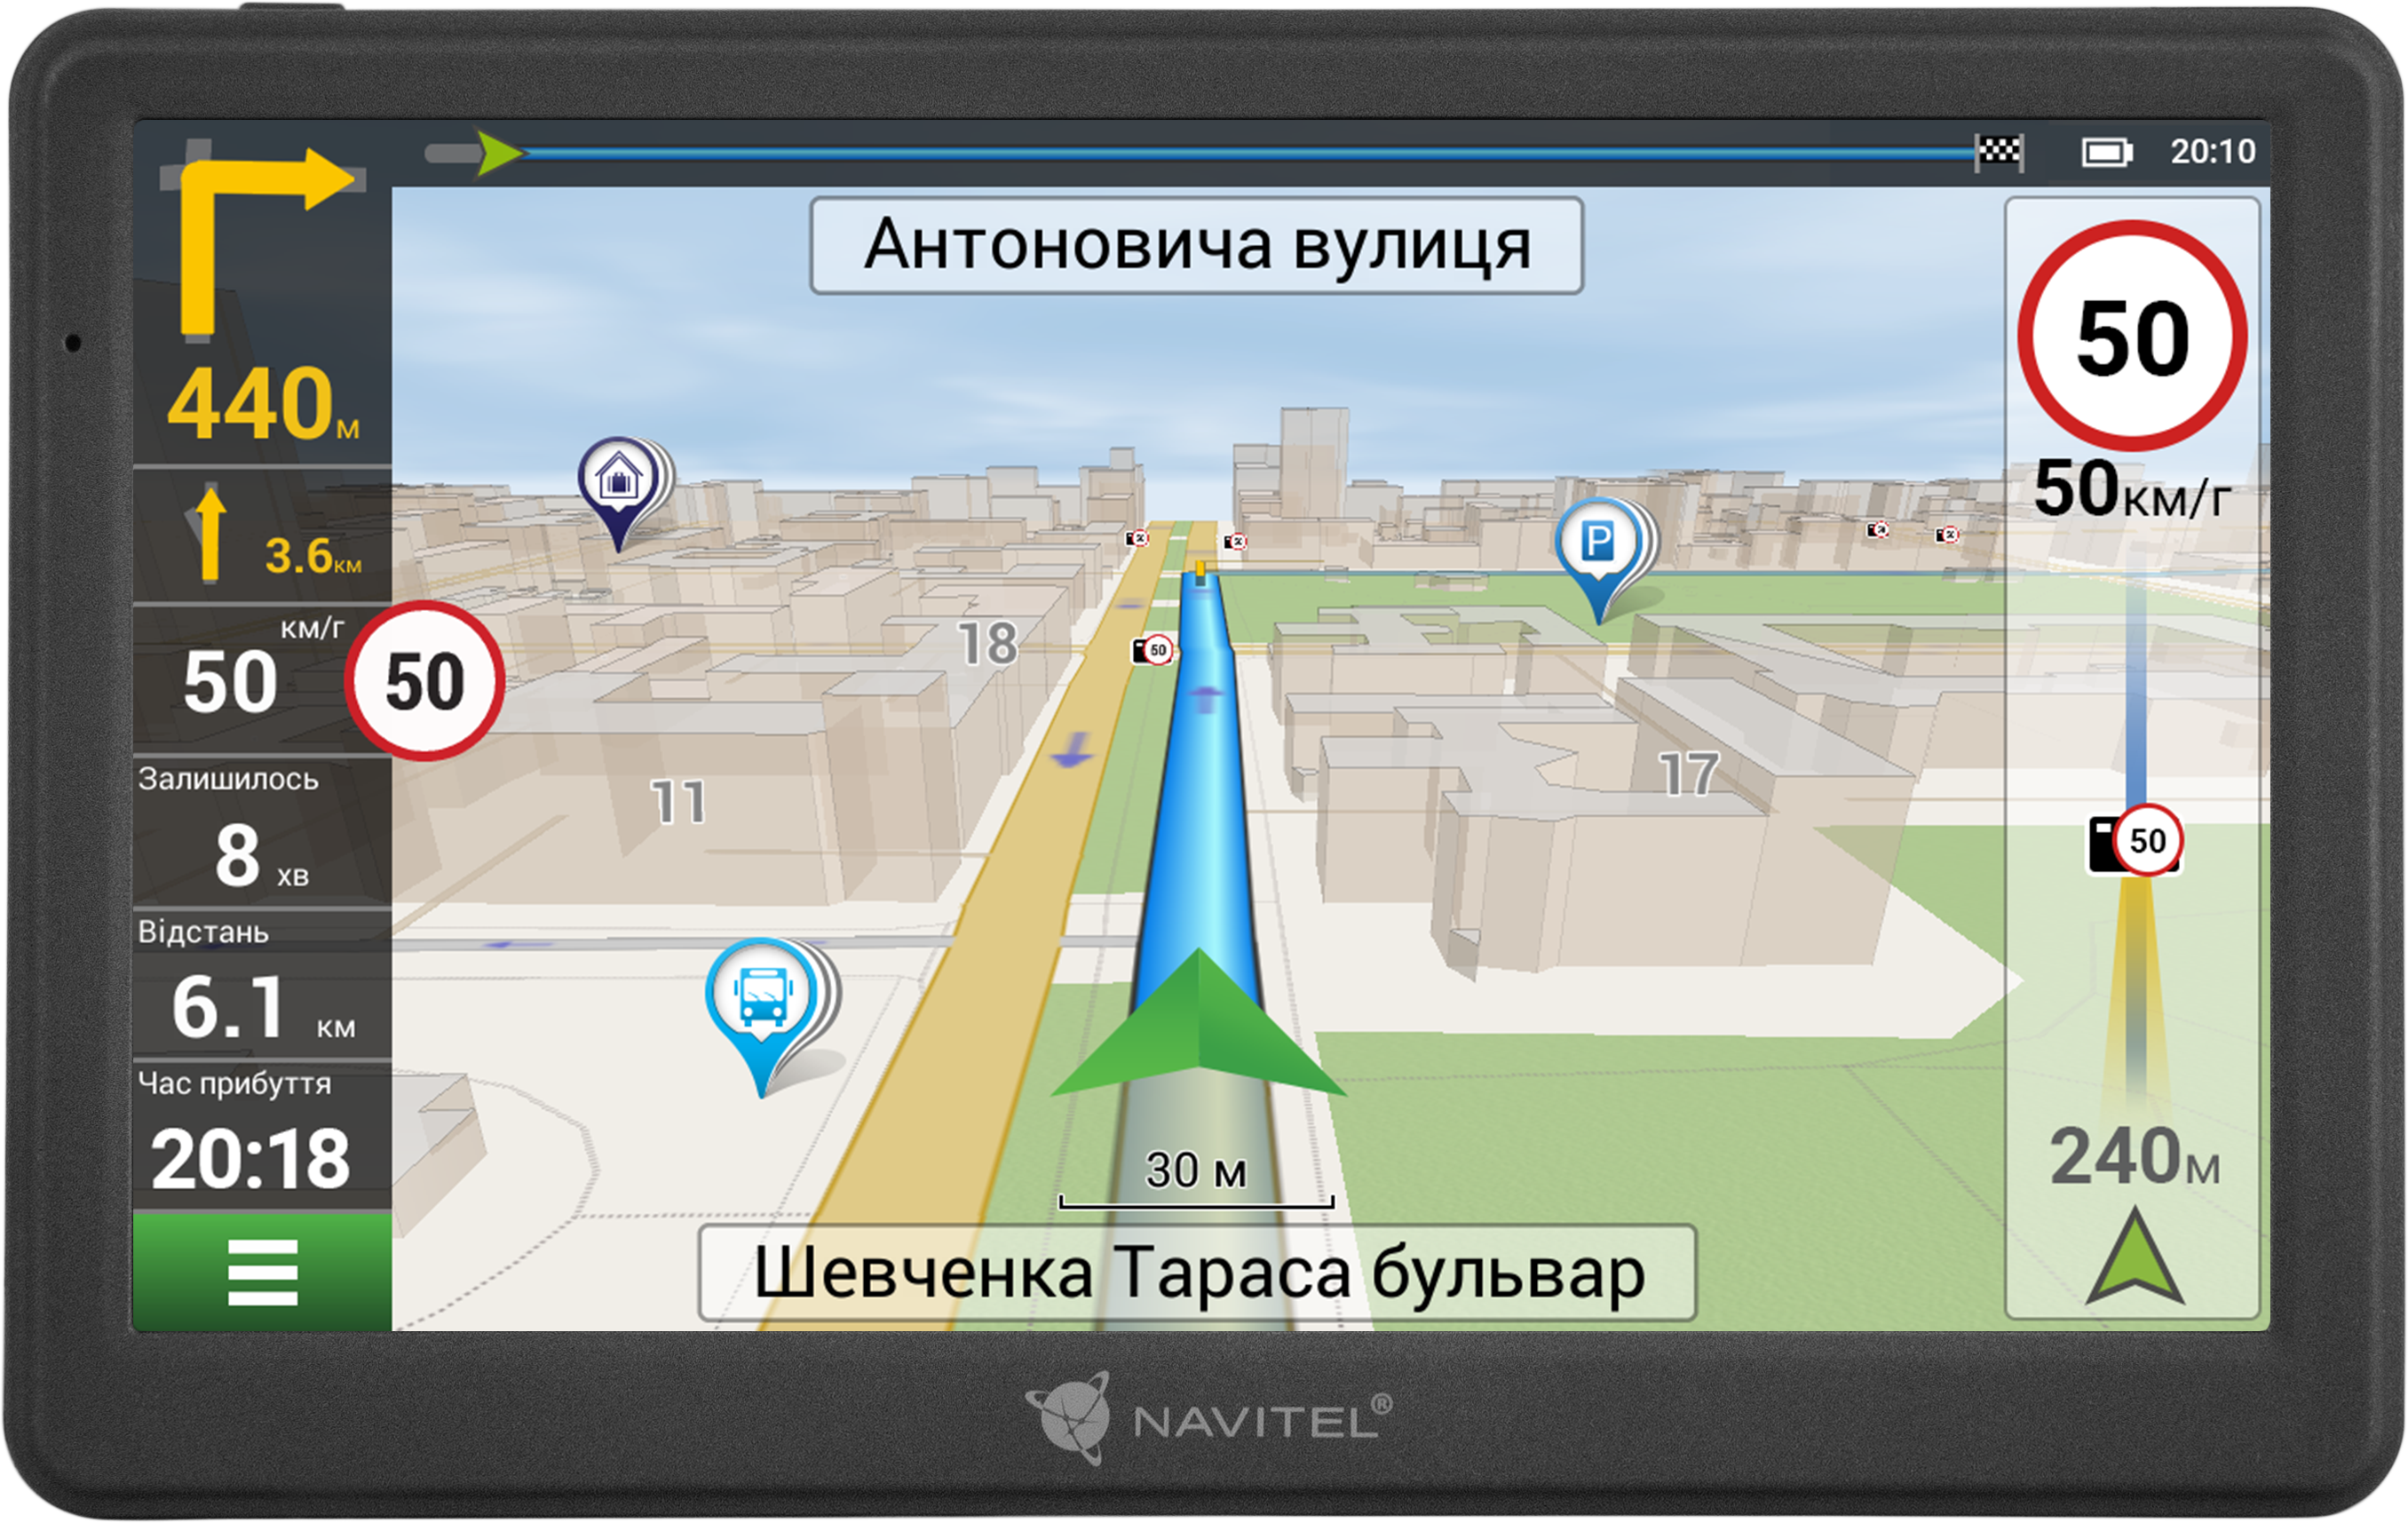 Навигатор Lauf gp055. Навител навигатор. GPS навигация. Карта GPS навигатор. Навител навигатор без регистрации